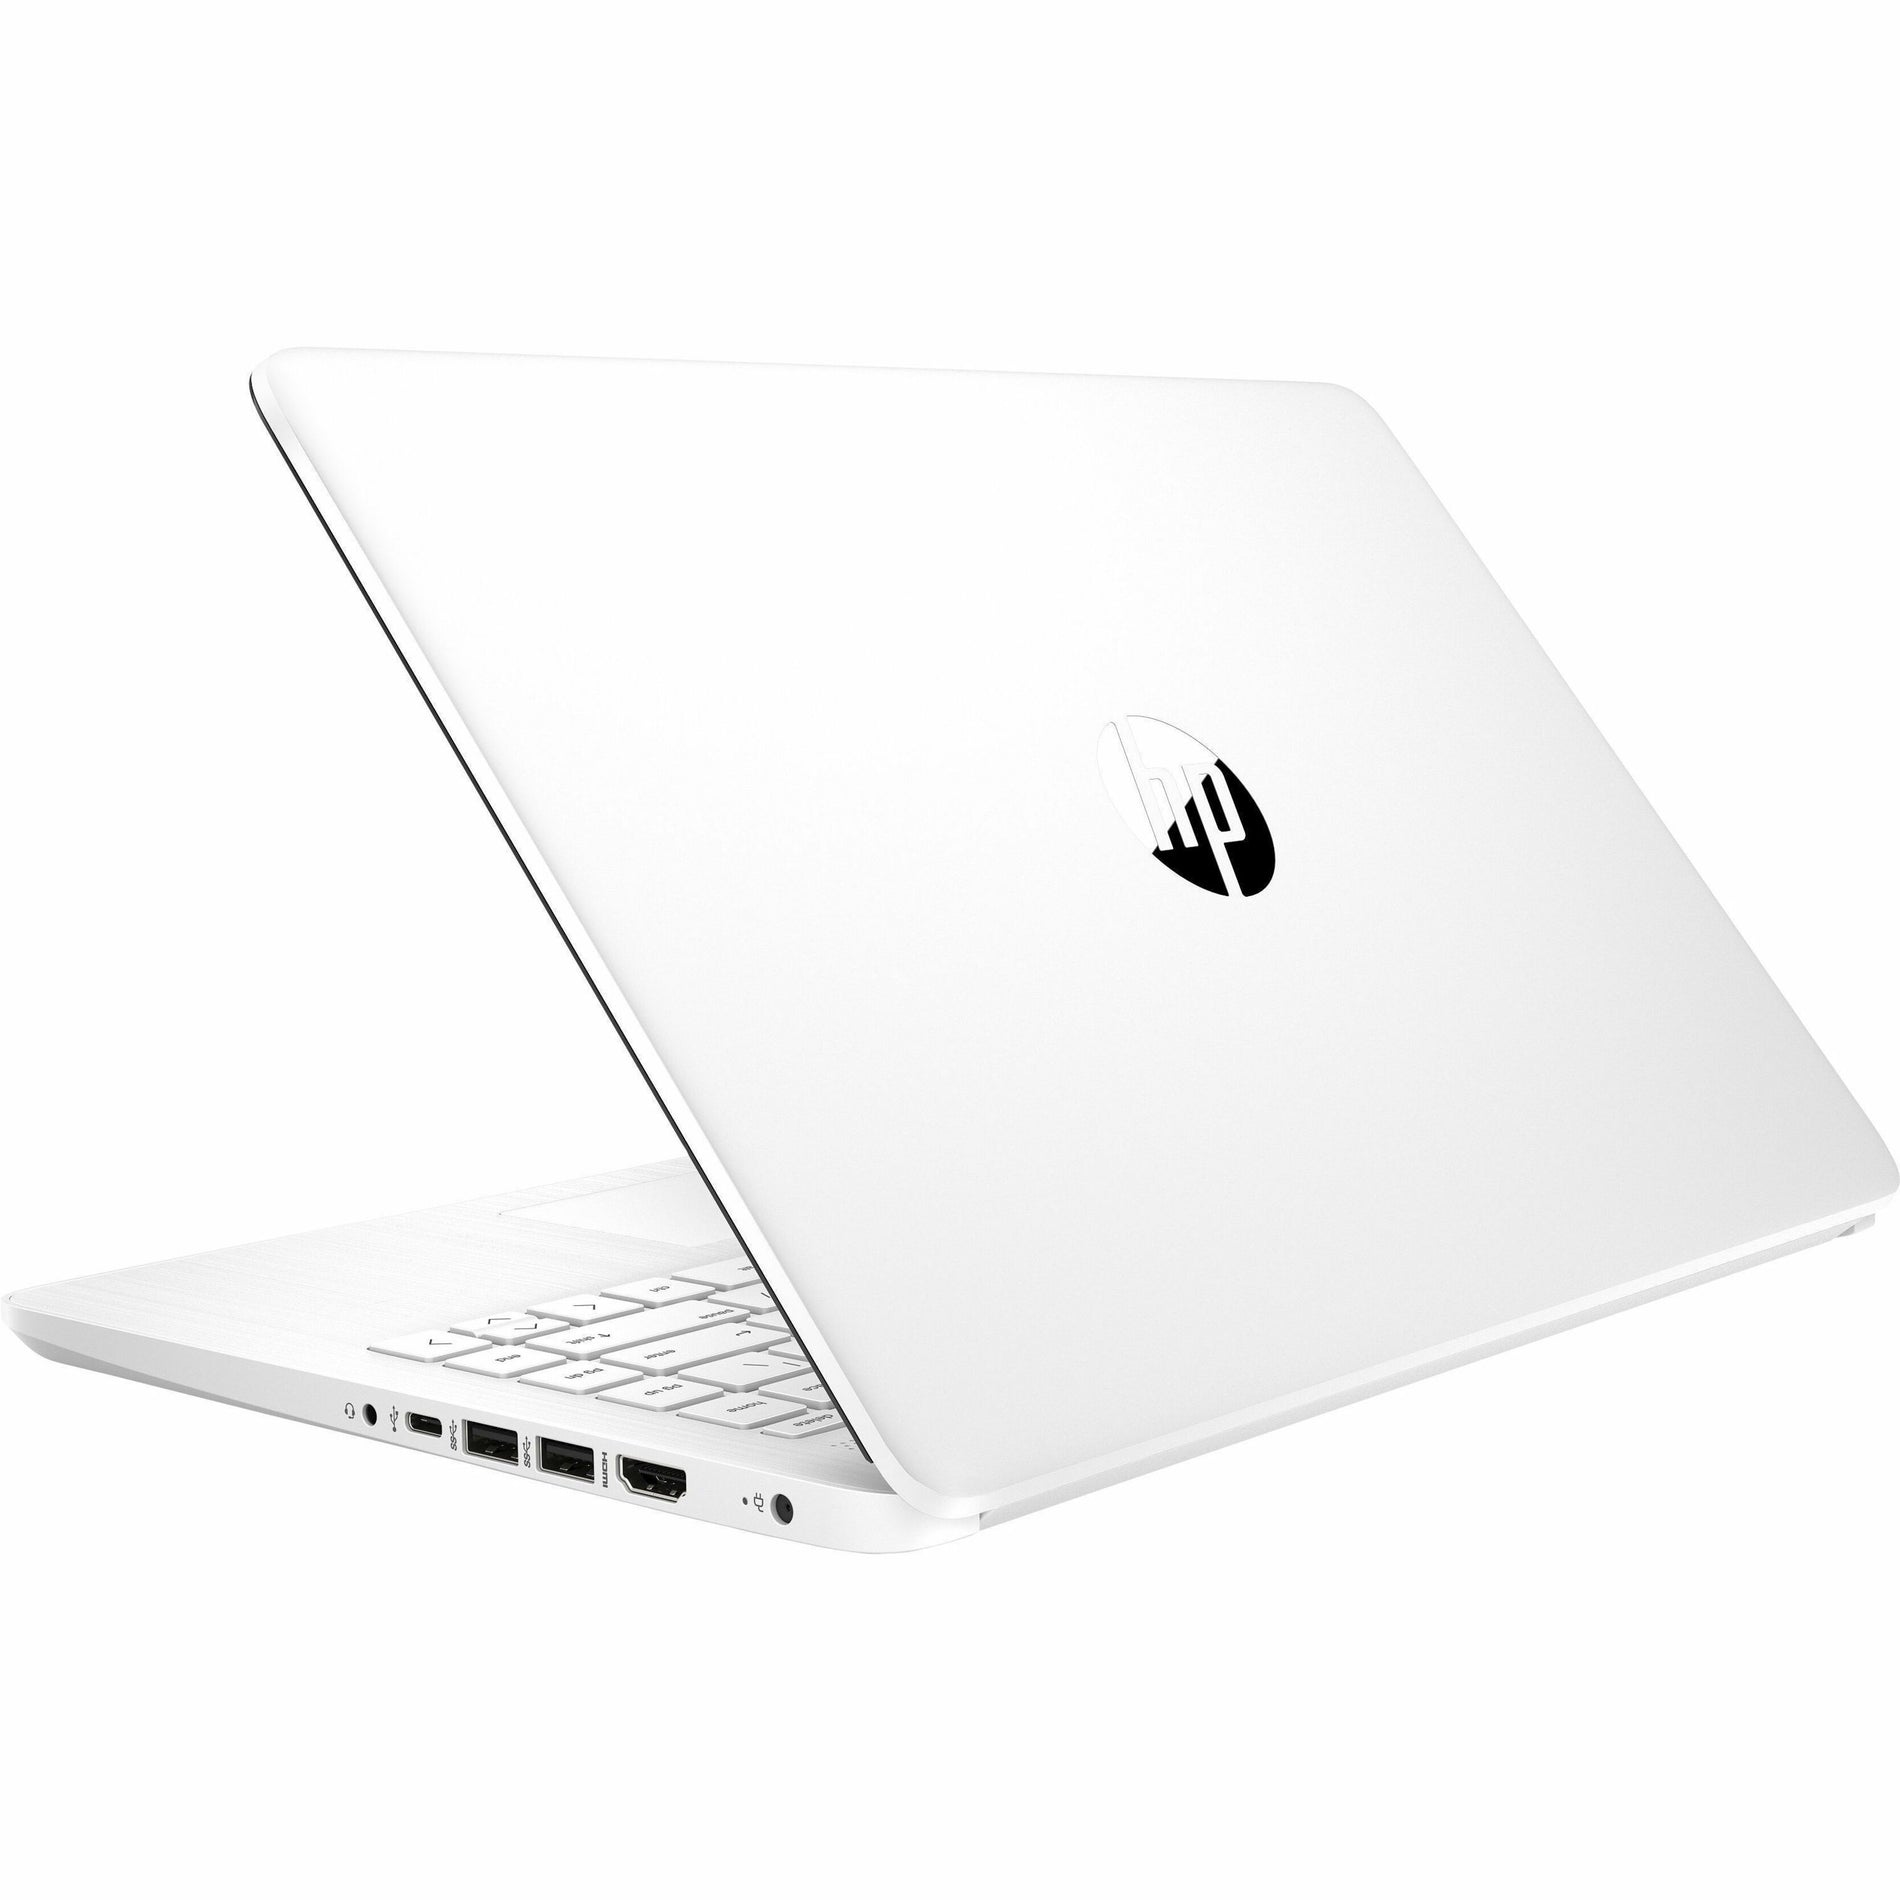 HP Laptop 14-dq0080nr 14" Touchscreen Notebook, Intel Celeron N4020, 4GB RAM, 64GB Flash Memory, Windows 10 Home in S mode